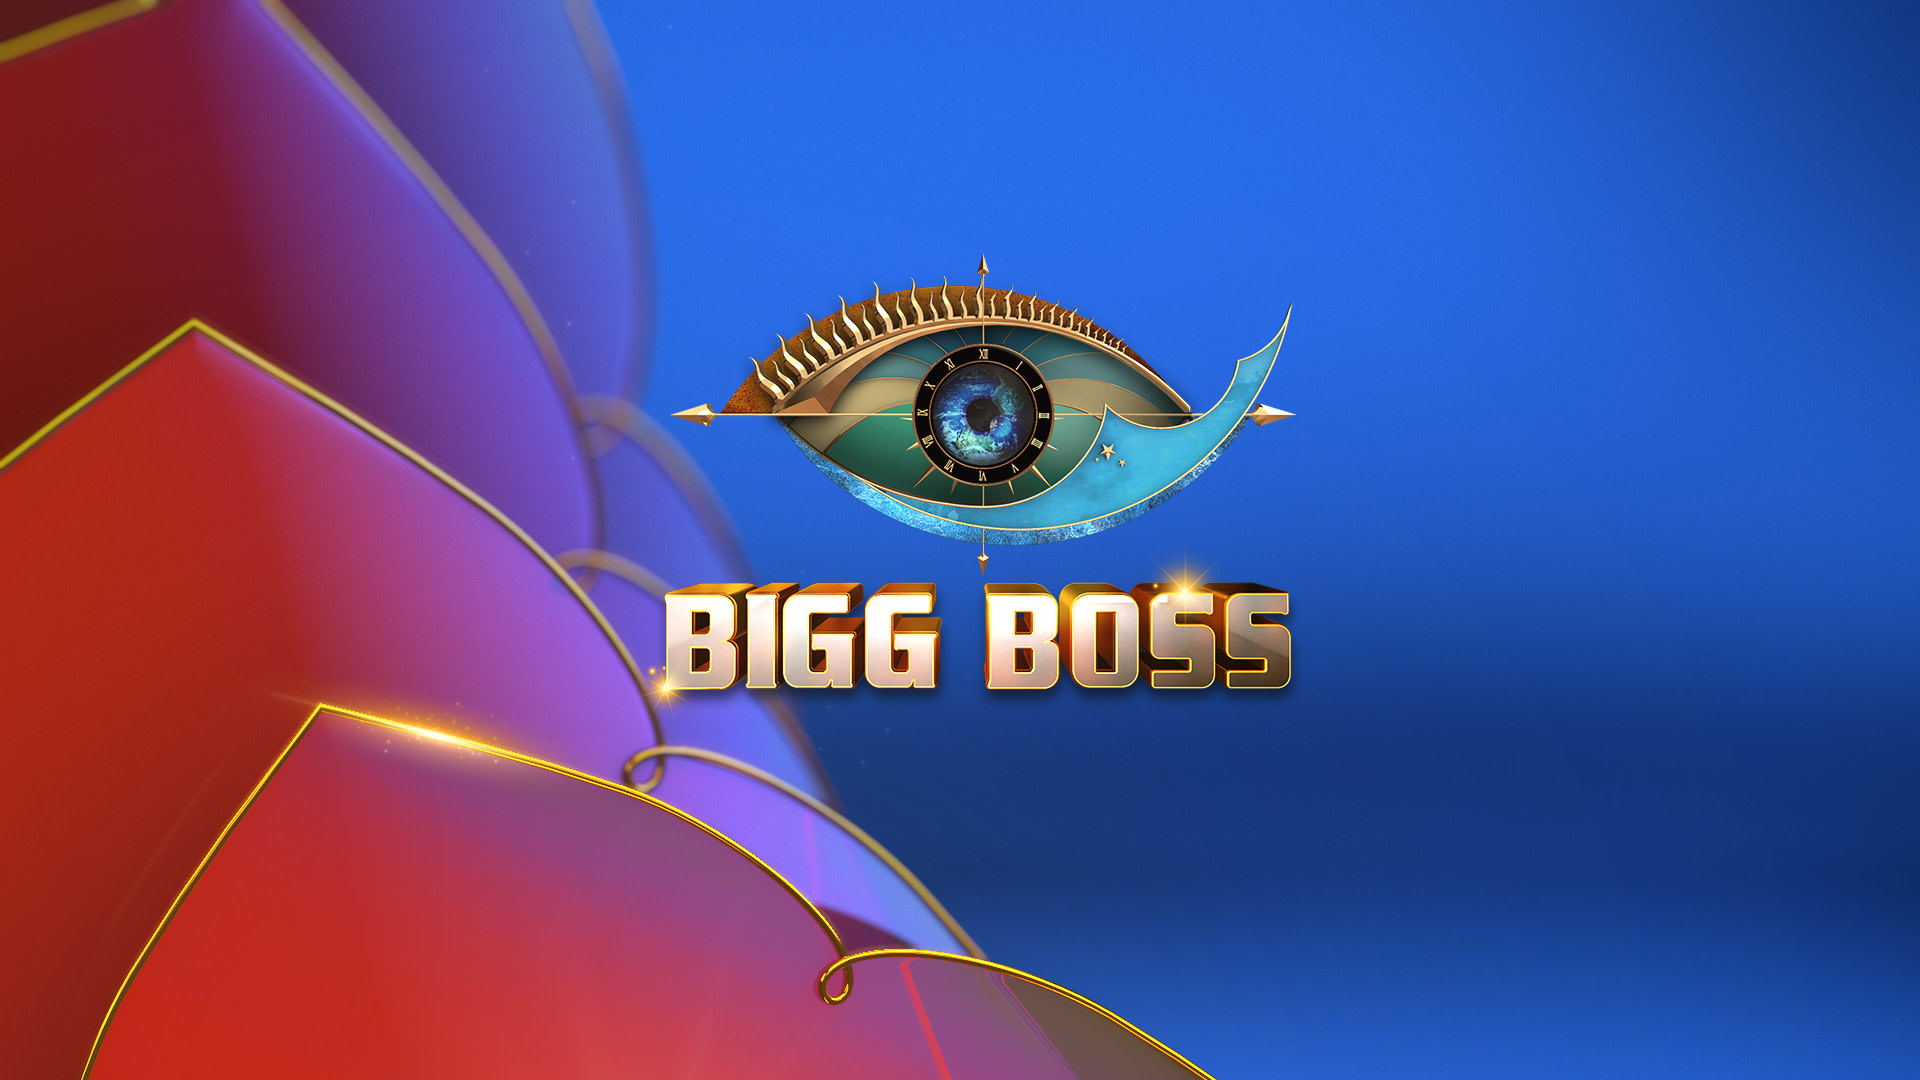 bigg boss season 3 full episodes tamil